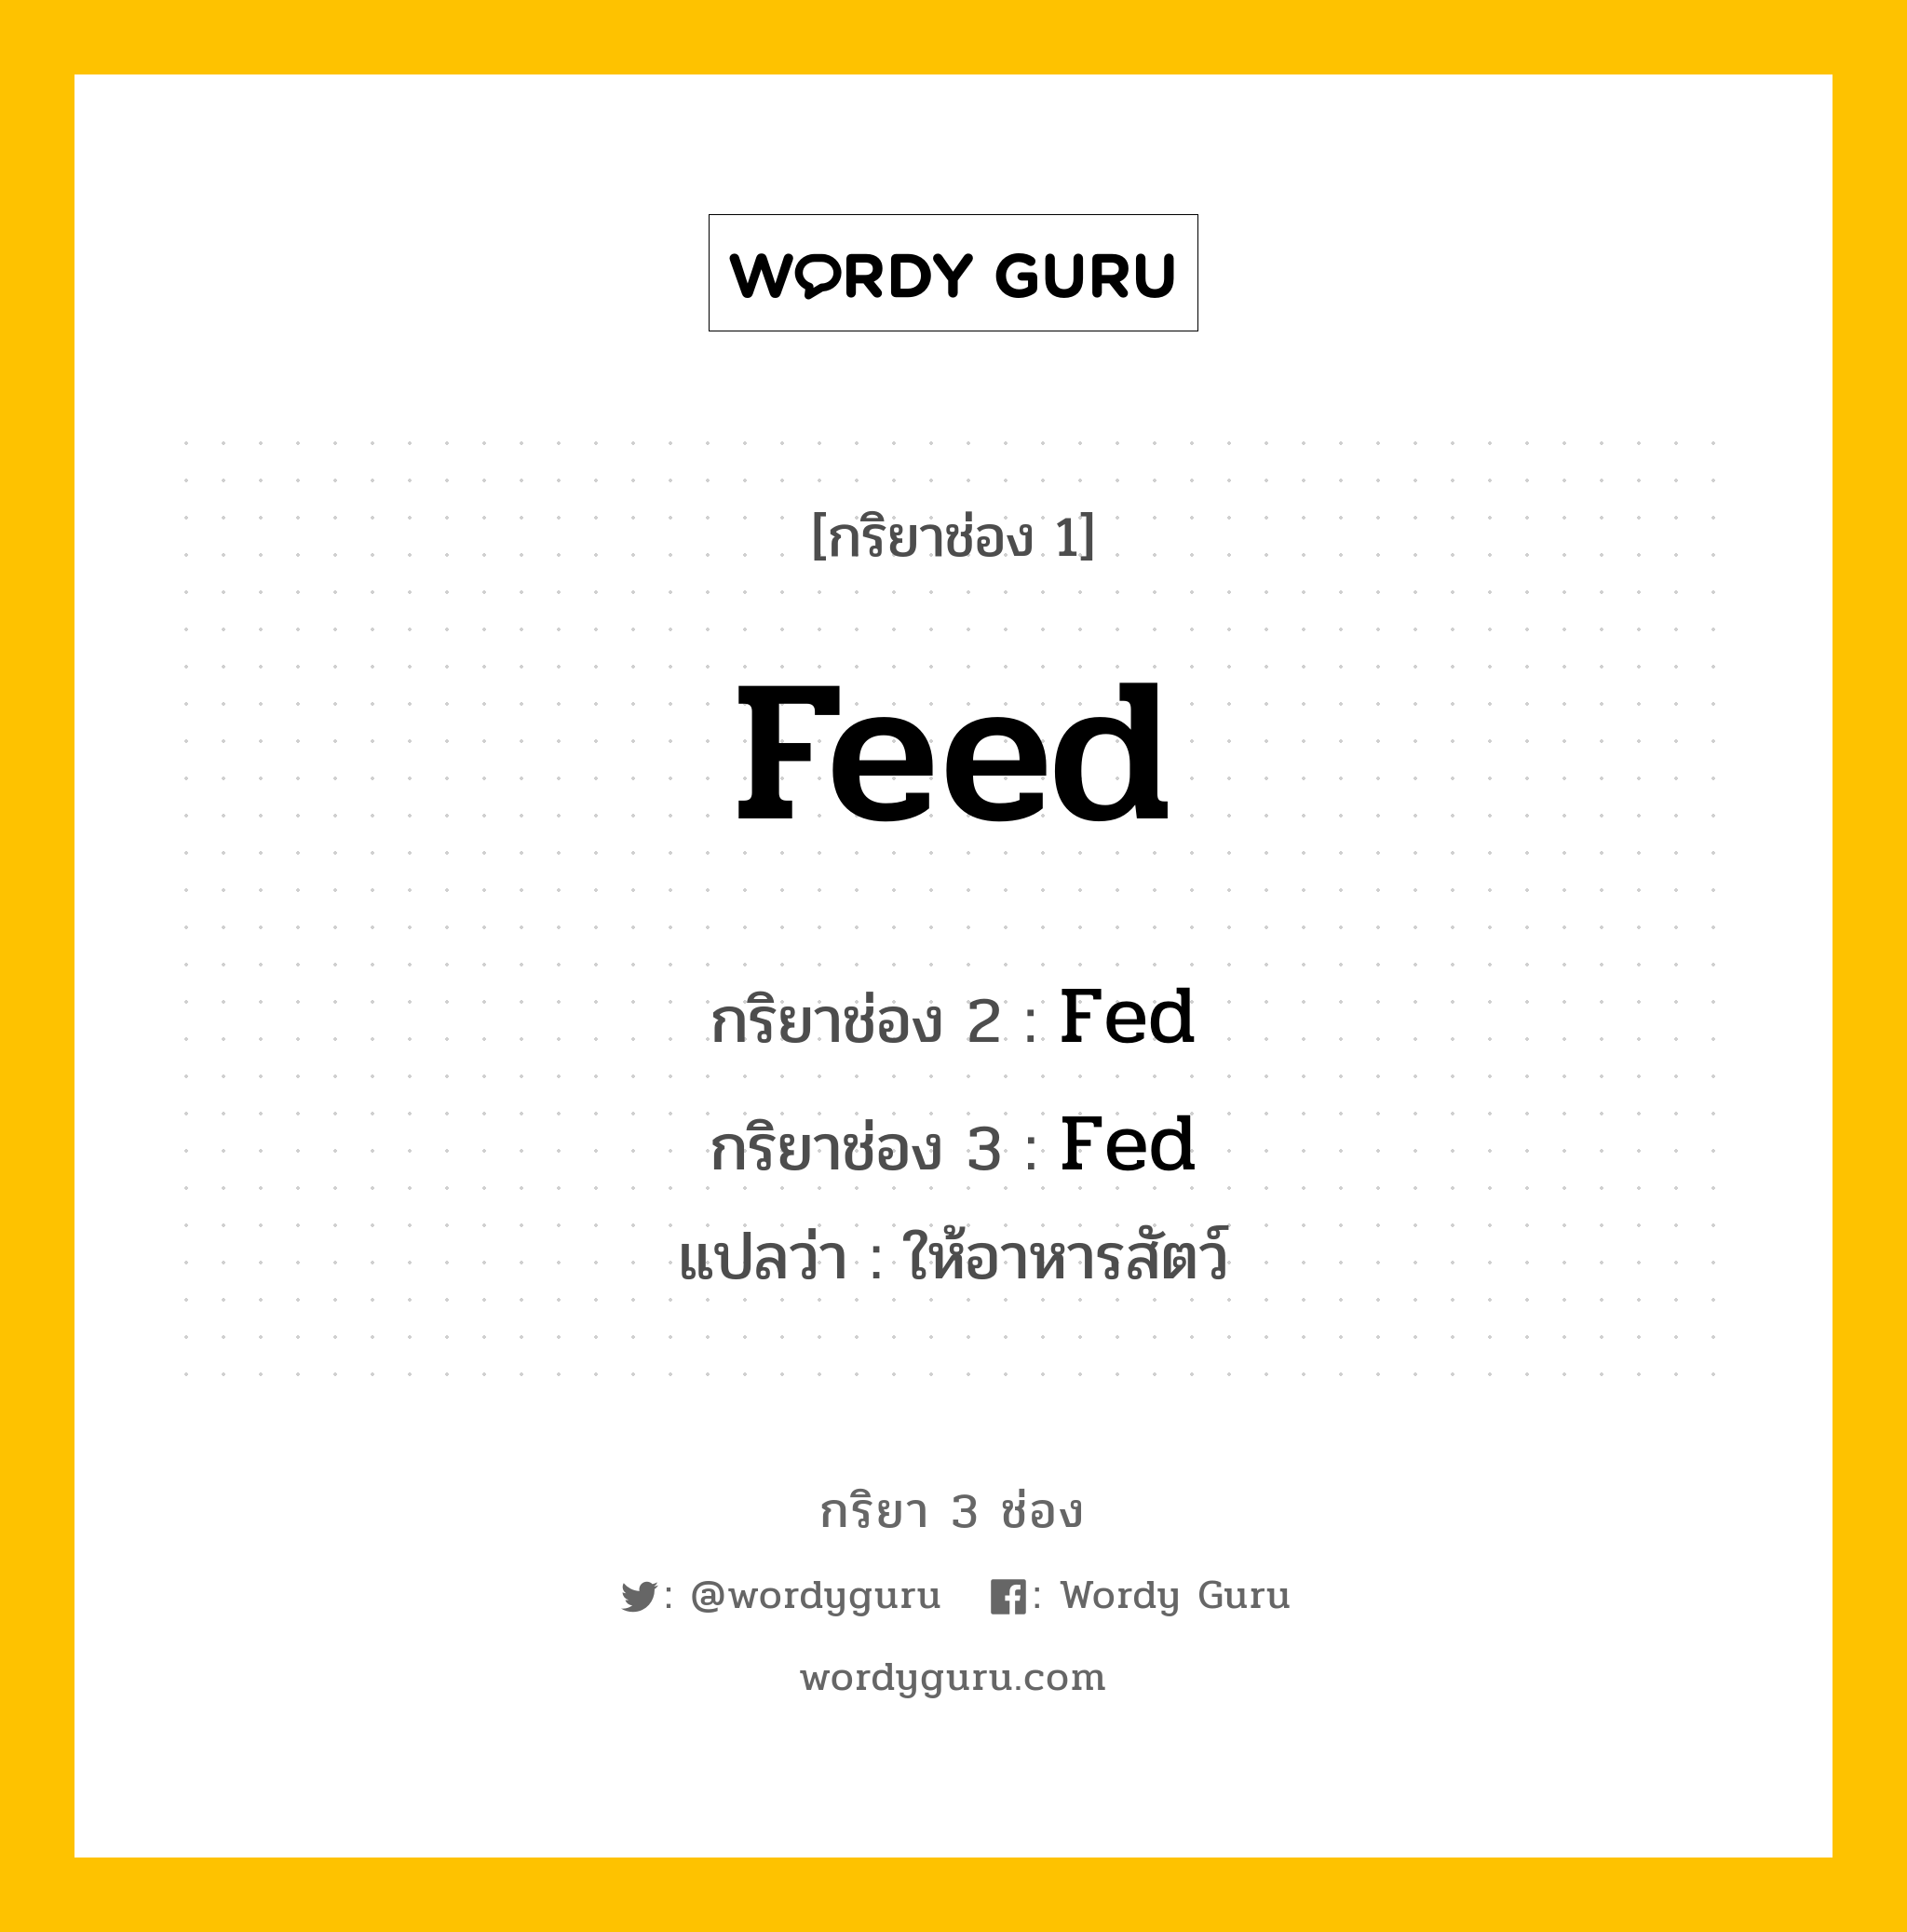 Feed มีกริยา 3 ช่องอะไรบ้าง? คำศัพท์ในกลุ่มประเภท Irregular Verb, กริยาช่อง 1 Feed กริยาช่อง 2 Fed กริยาช่อง 3 Fed แปลว่า ให้อาหารสัตว์ หมวด Irregular Verb